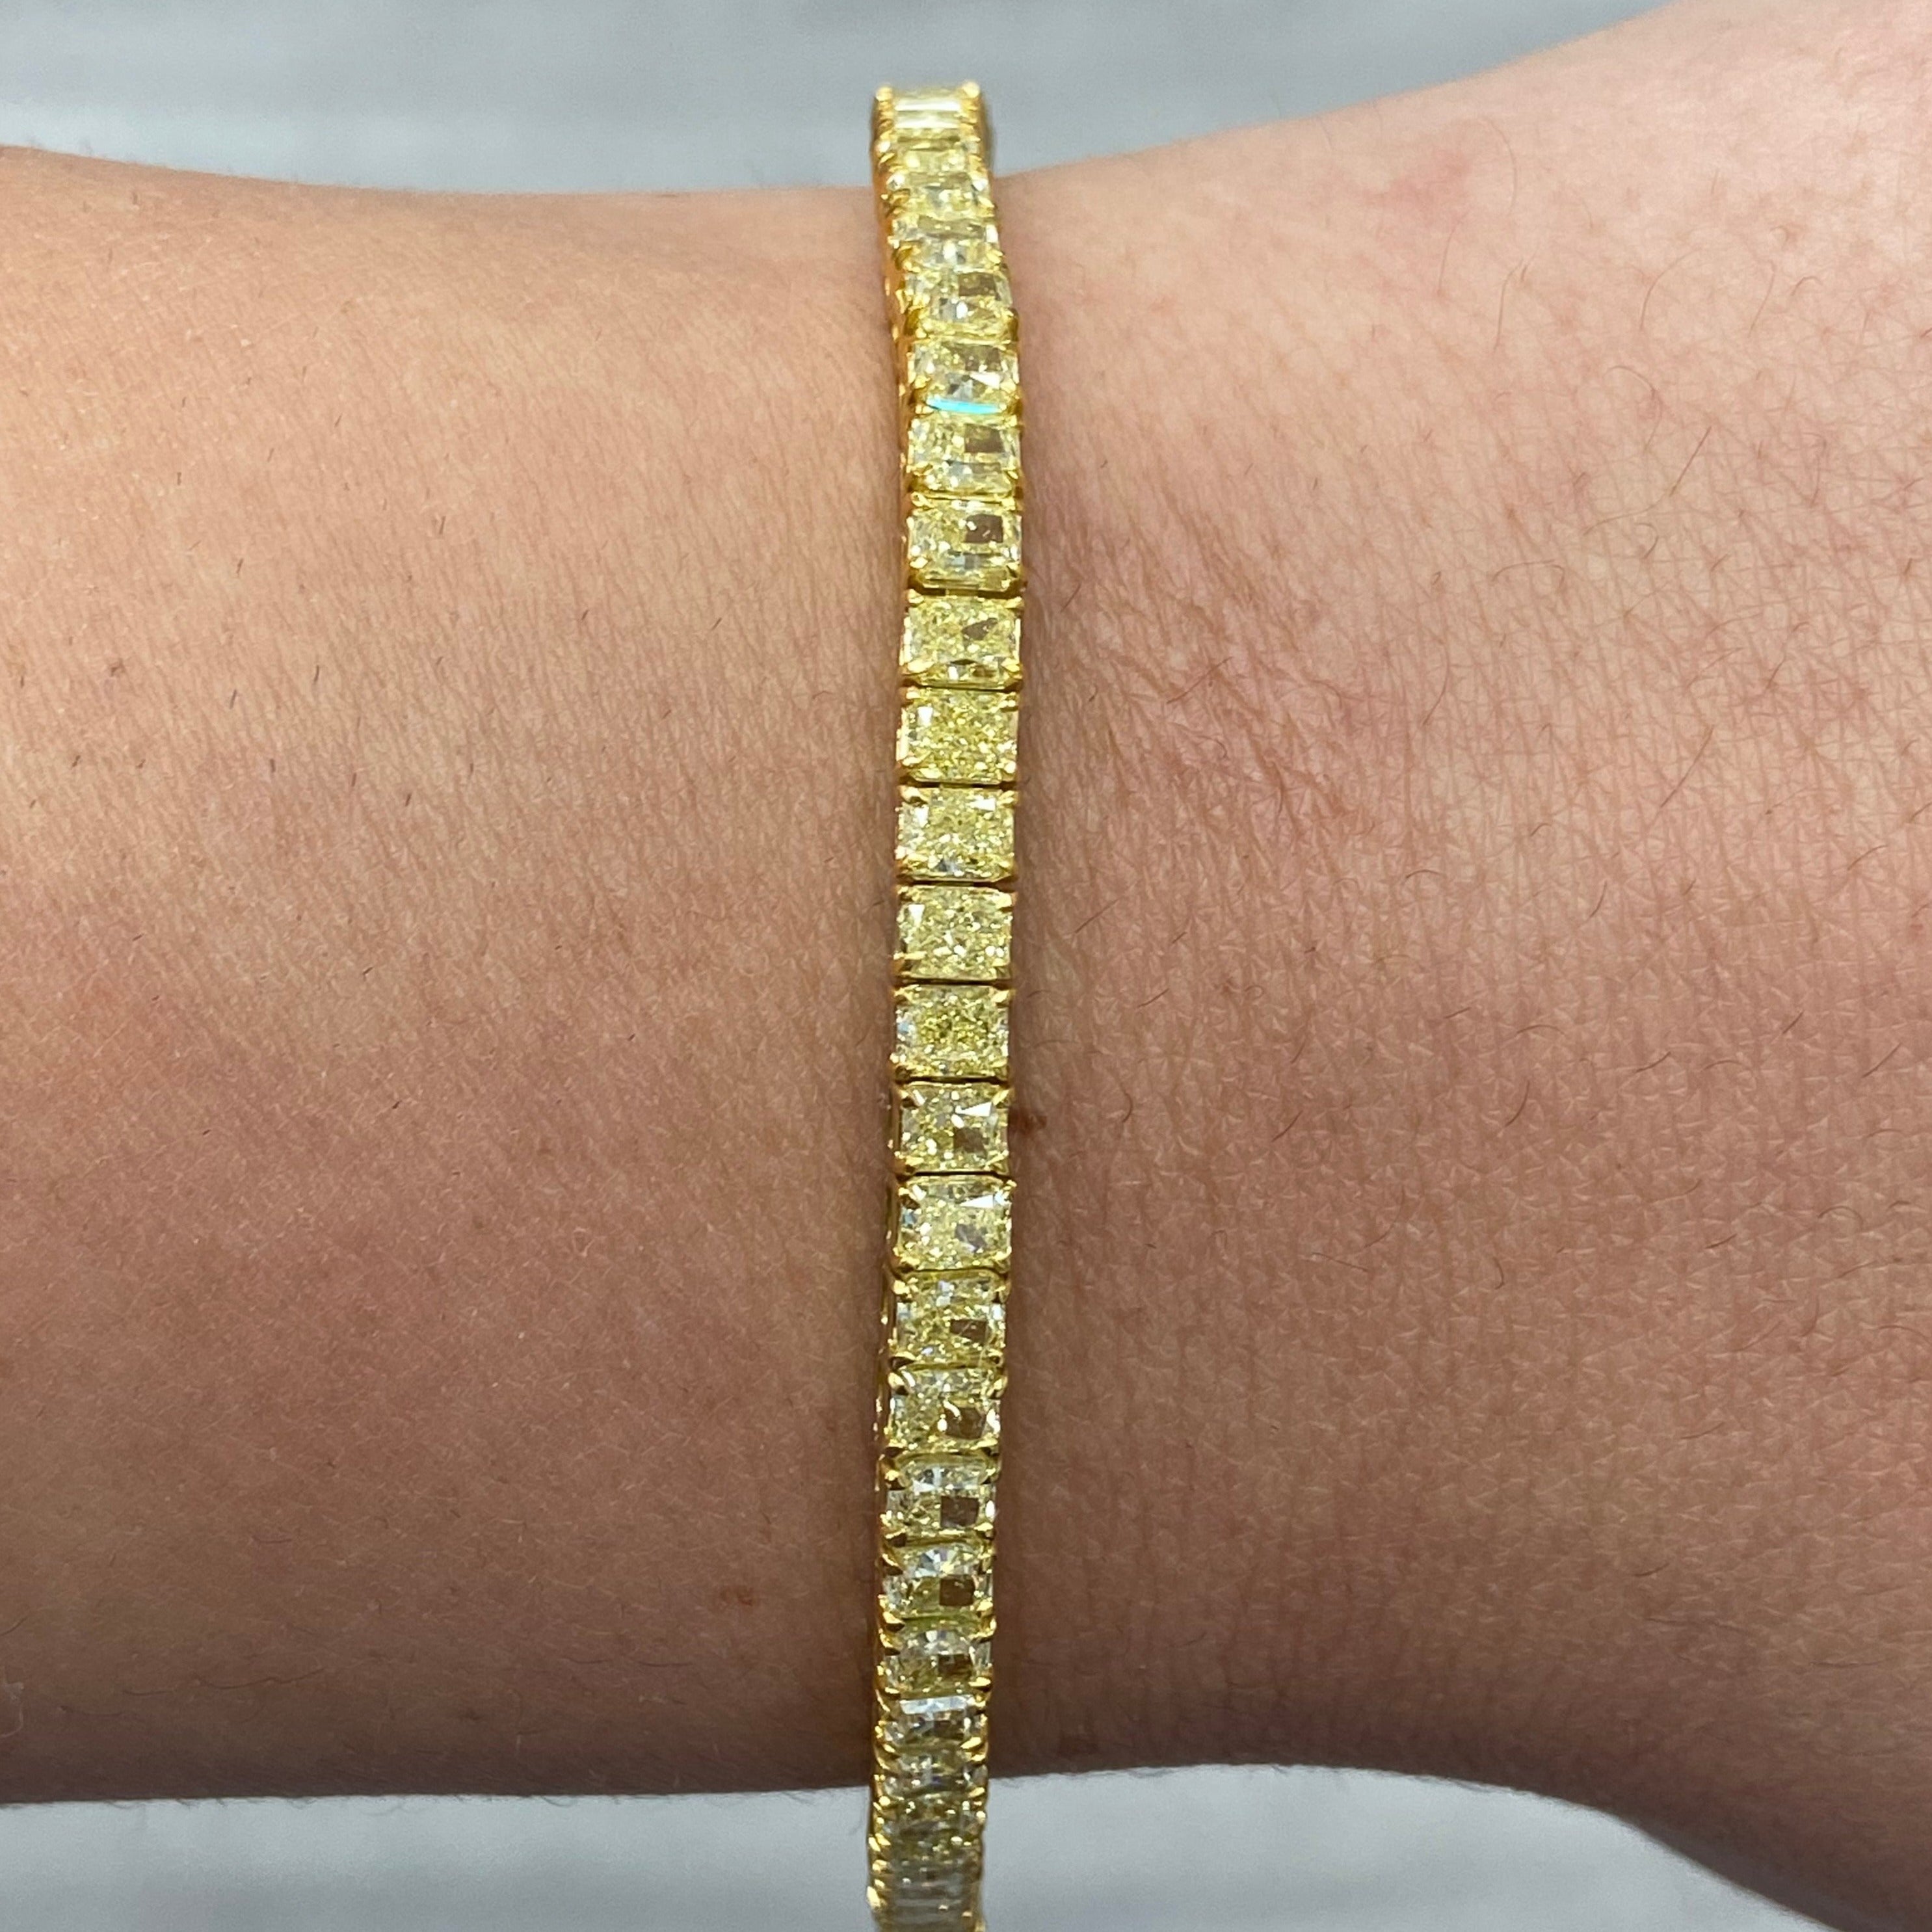 1 3/4 Carat Diamond Tennis Bracelet in 10K Yellow Gold (6.5 Inch) -  Walmart.com